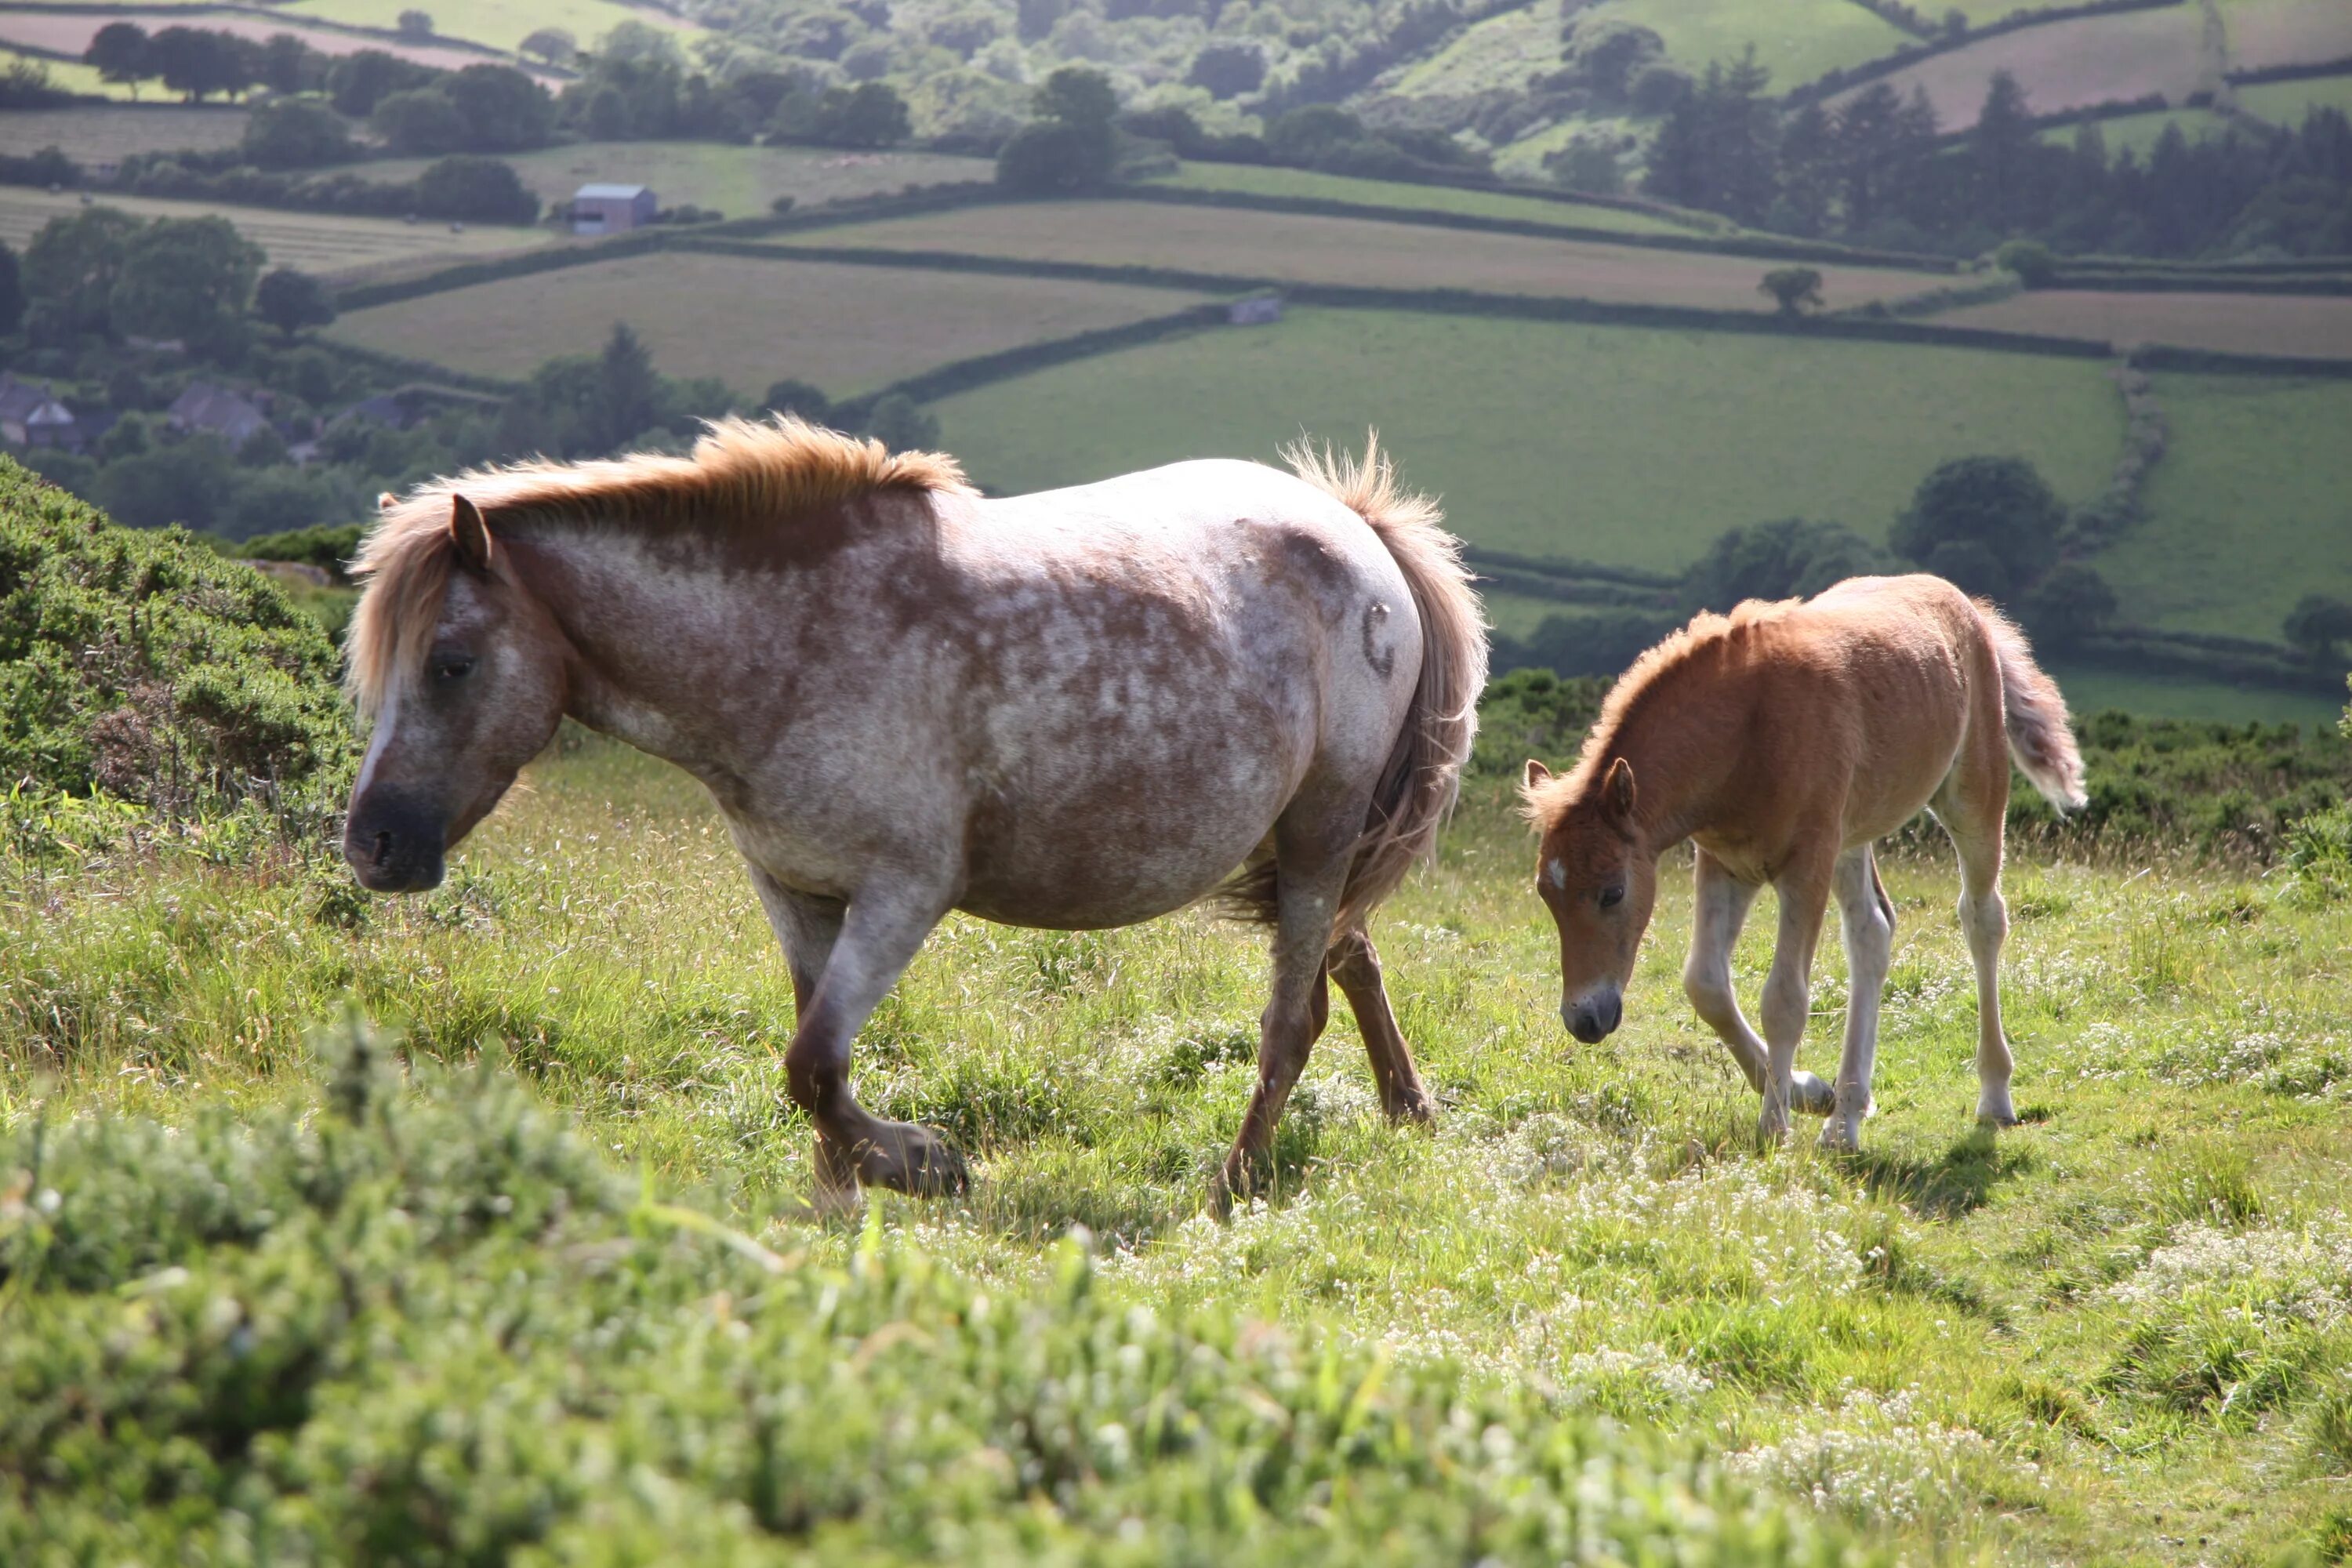 Dartmoor Pony. Dartmoor лошади. Дартмурские пони. Дикие лошади. Дикая лошадь из азии 5 букв сканворд